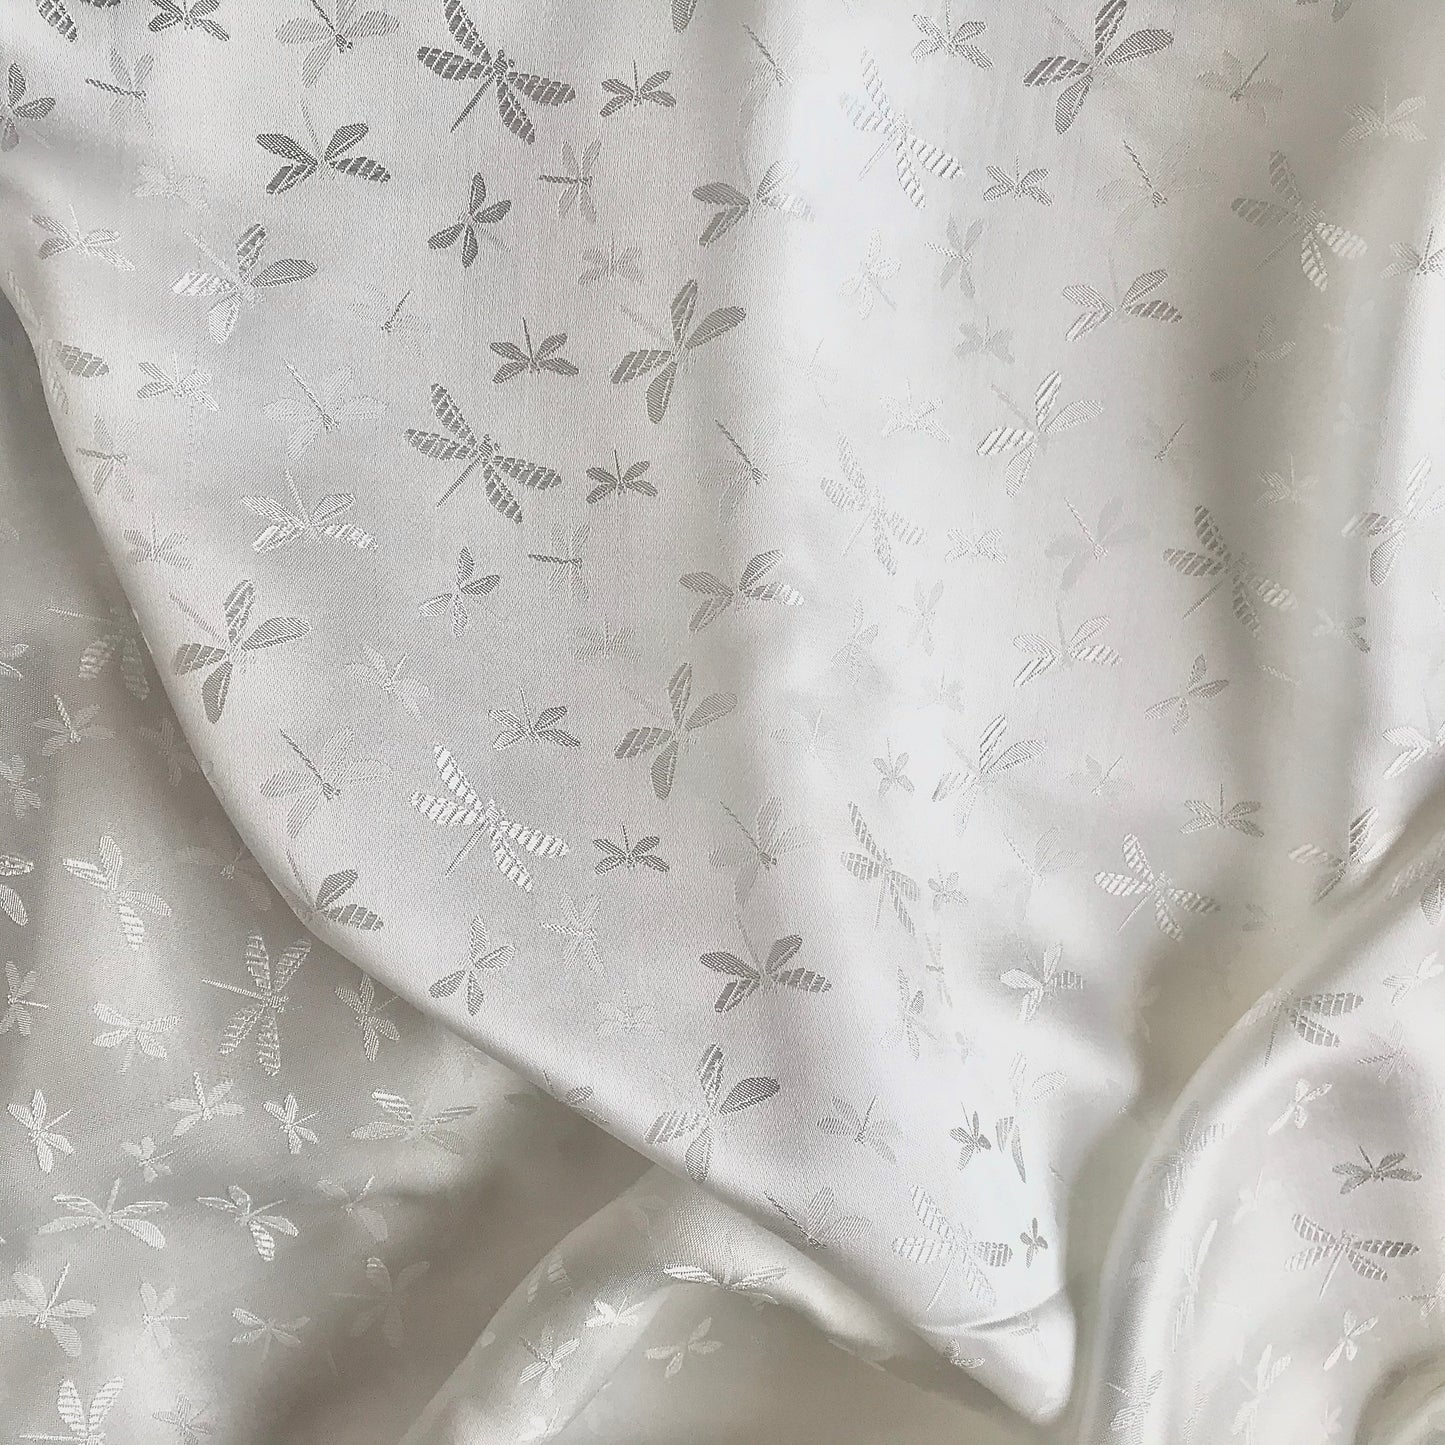 White silk with Dragonfly patterns - PURE MULBERRY SILK fabric by the yard - Gragonfly silk -Luxury Silk - Natural silk - Handmade in VietNam